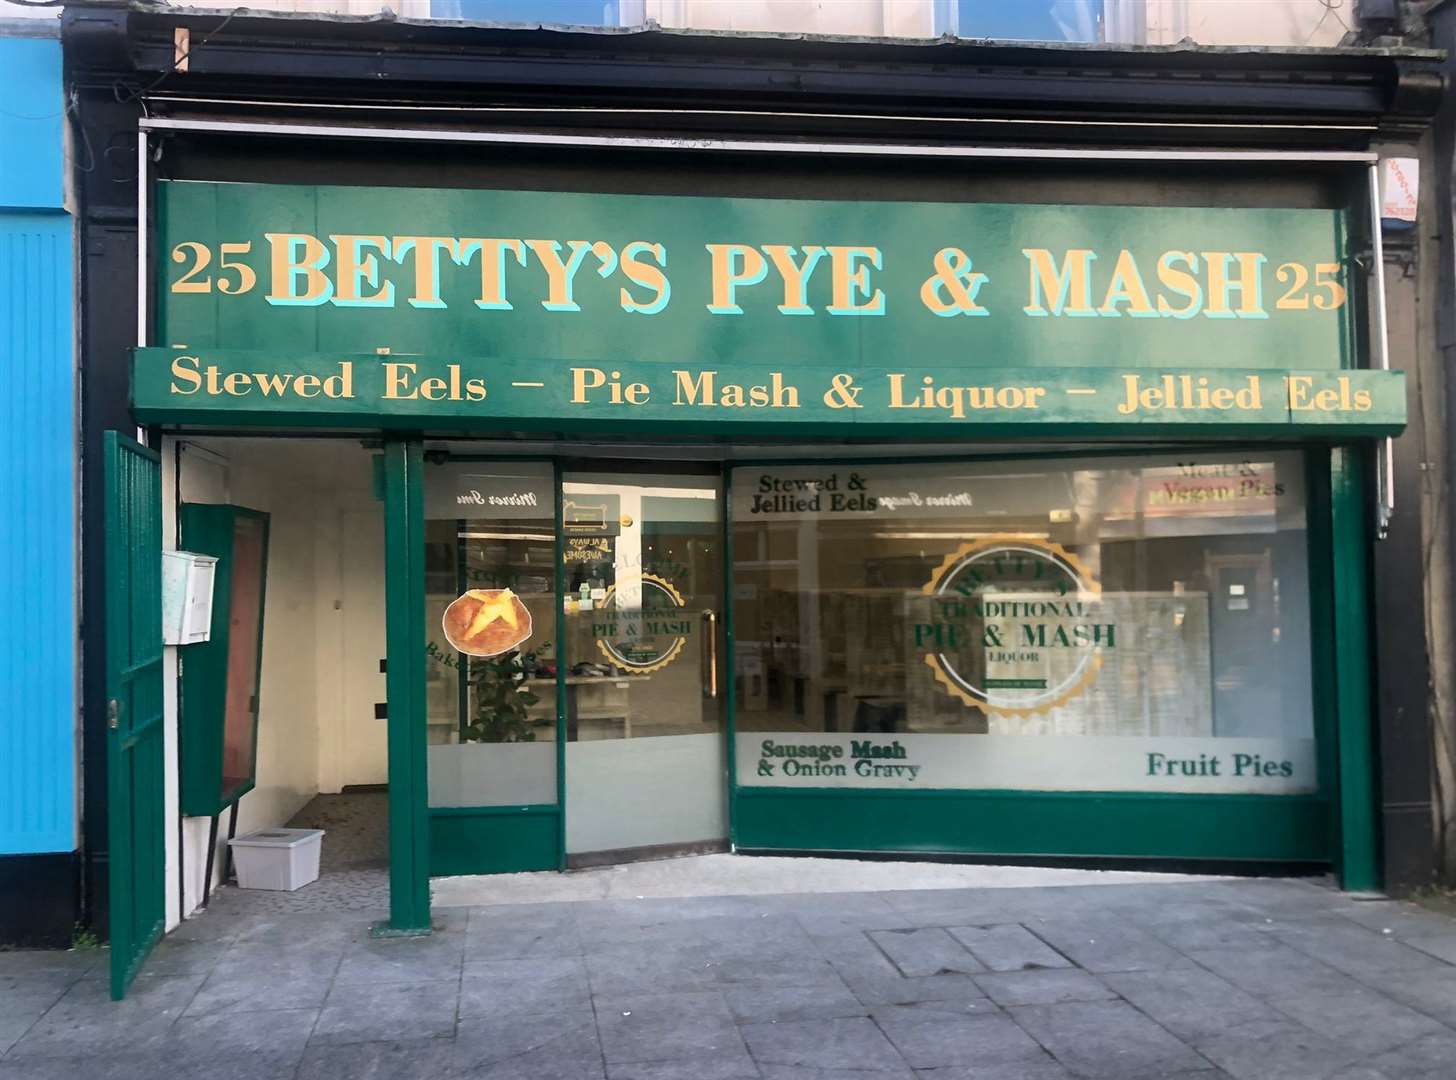 Betty's Pye and Mash in Folkestone